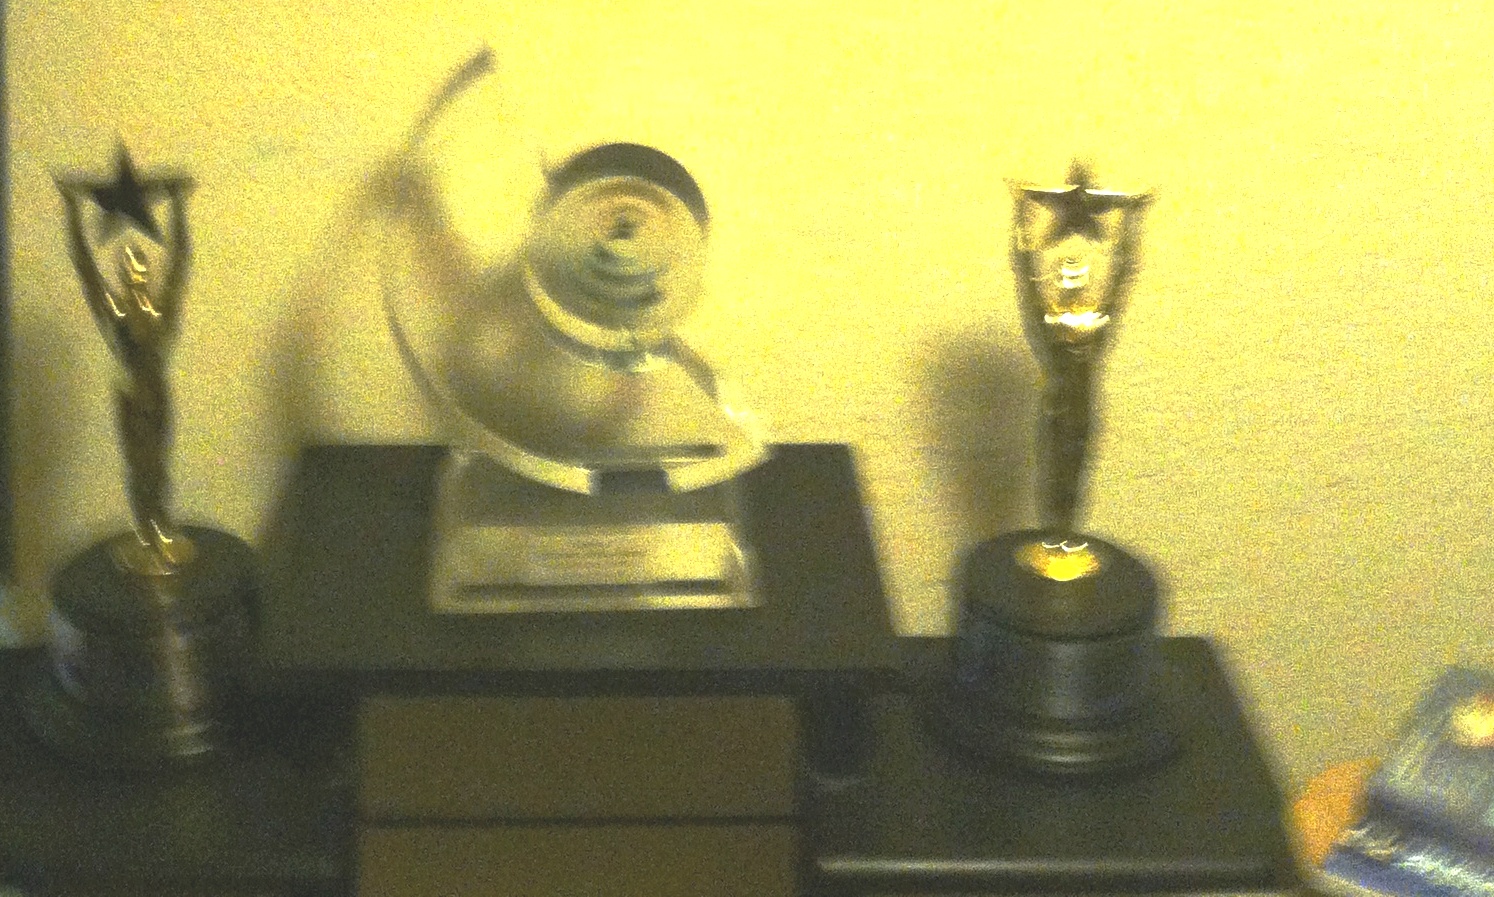 Two Platinum Remi's. One International Family Film Award.